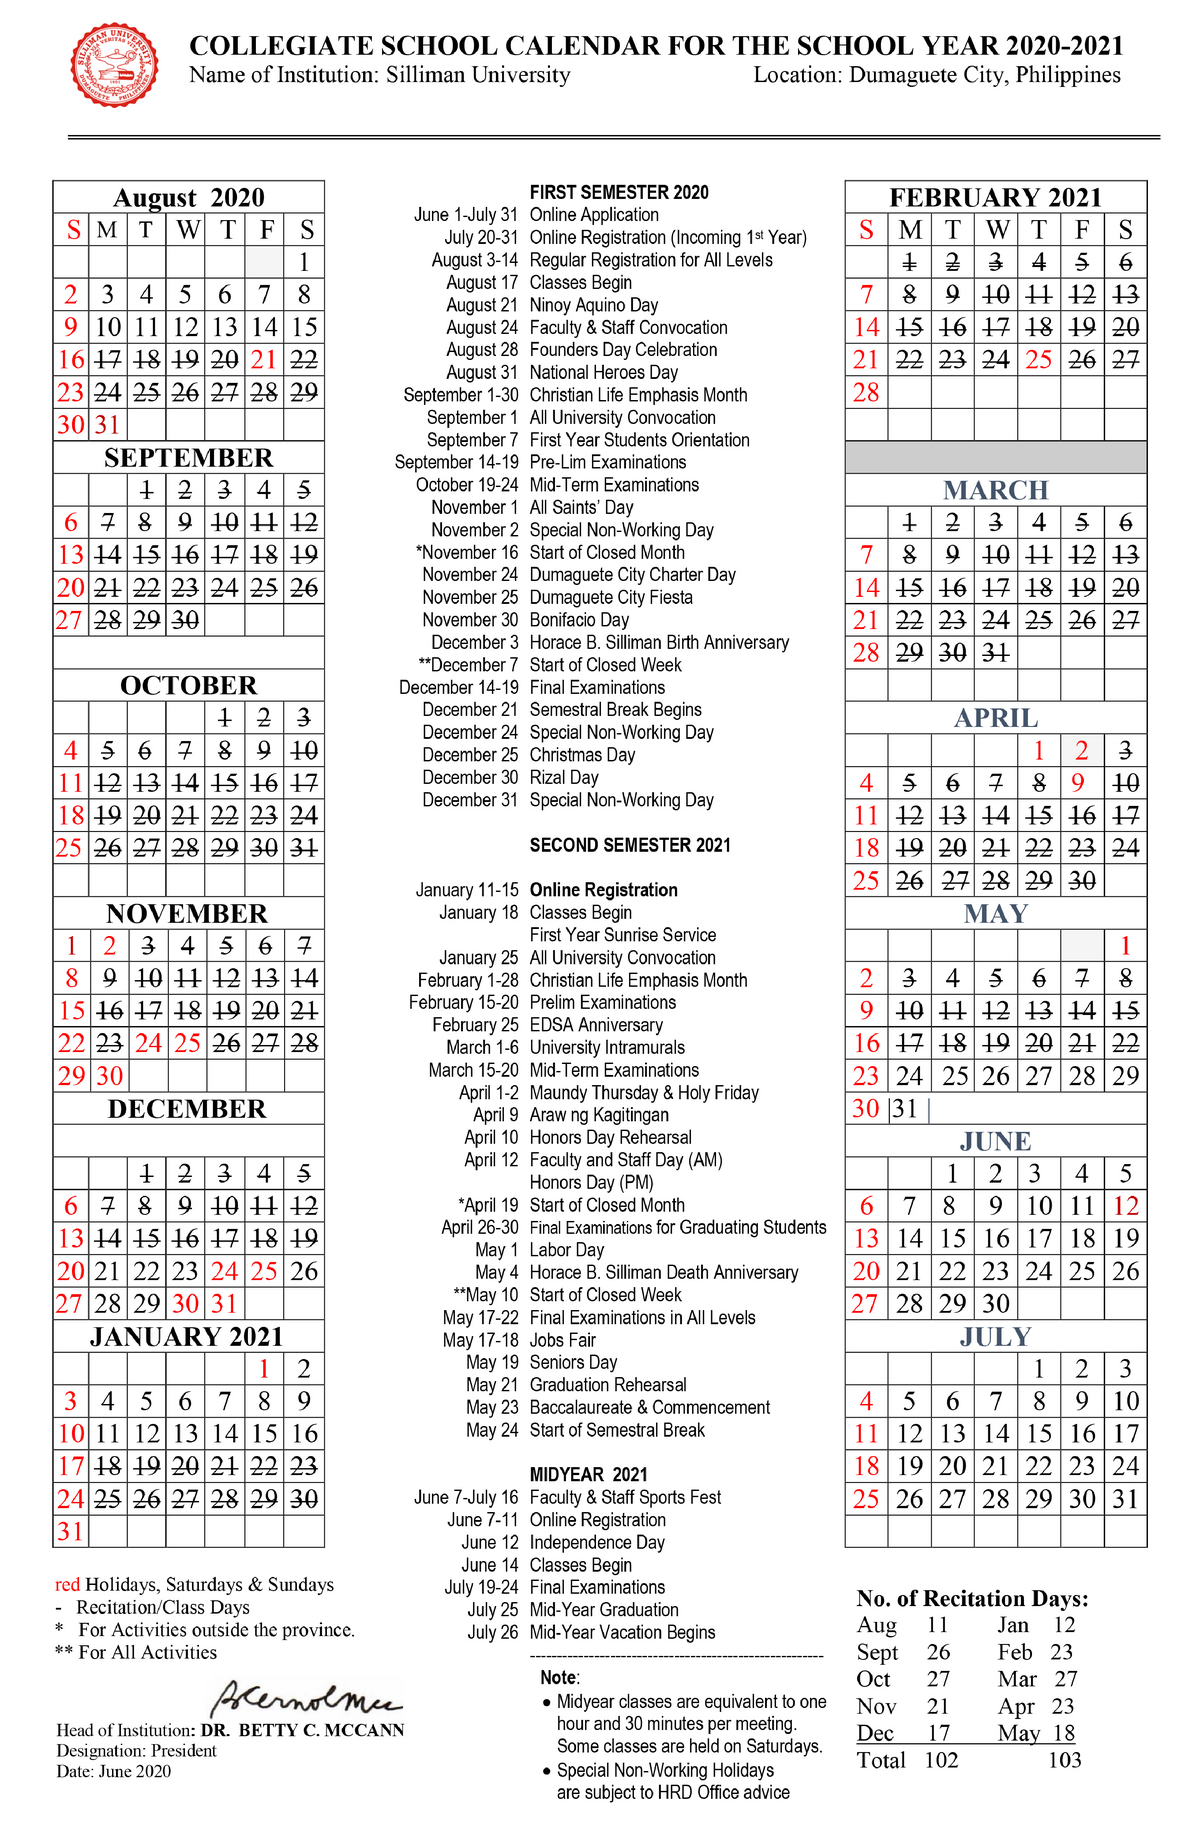 Silliman University College Calendar SY 2020 2021a Accountancy 21